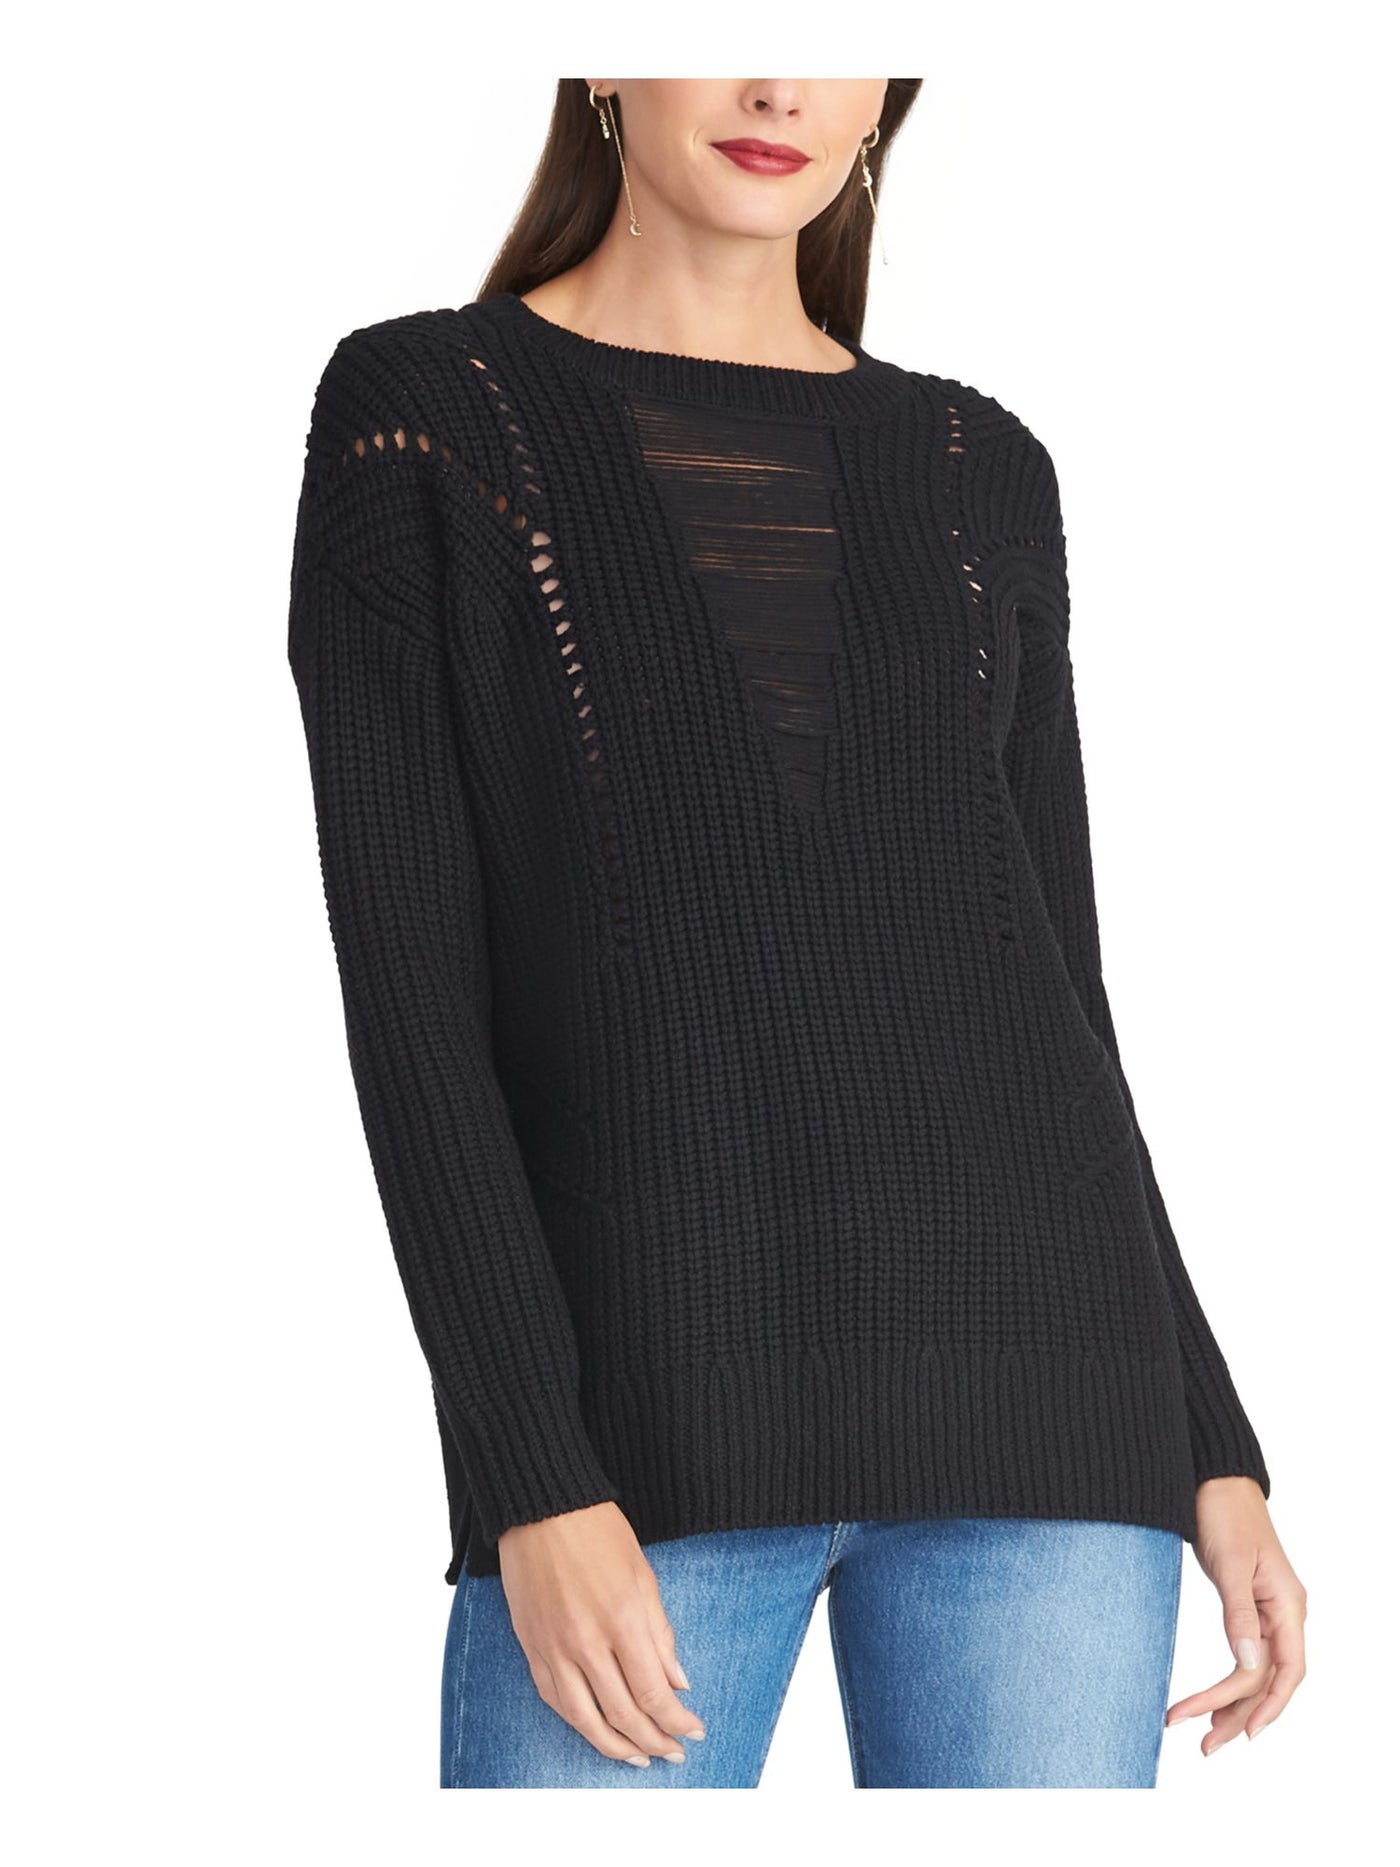 RACHEL RACHEL ROY Womens Black Long Sleeve Jewel Neck Sweater M